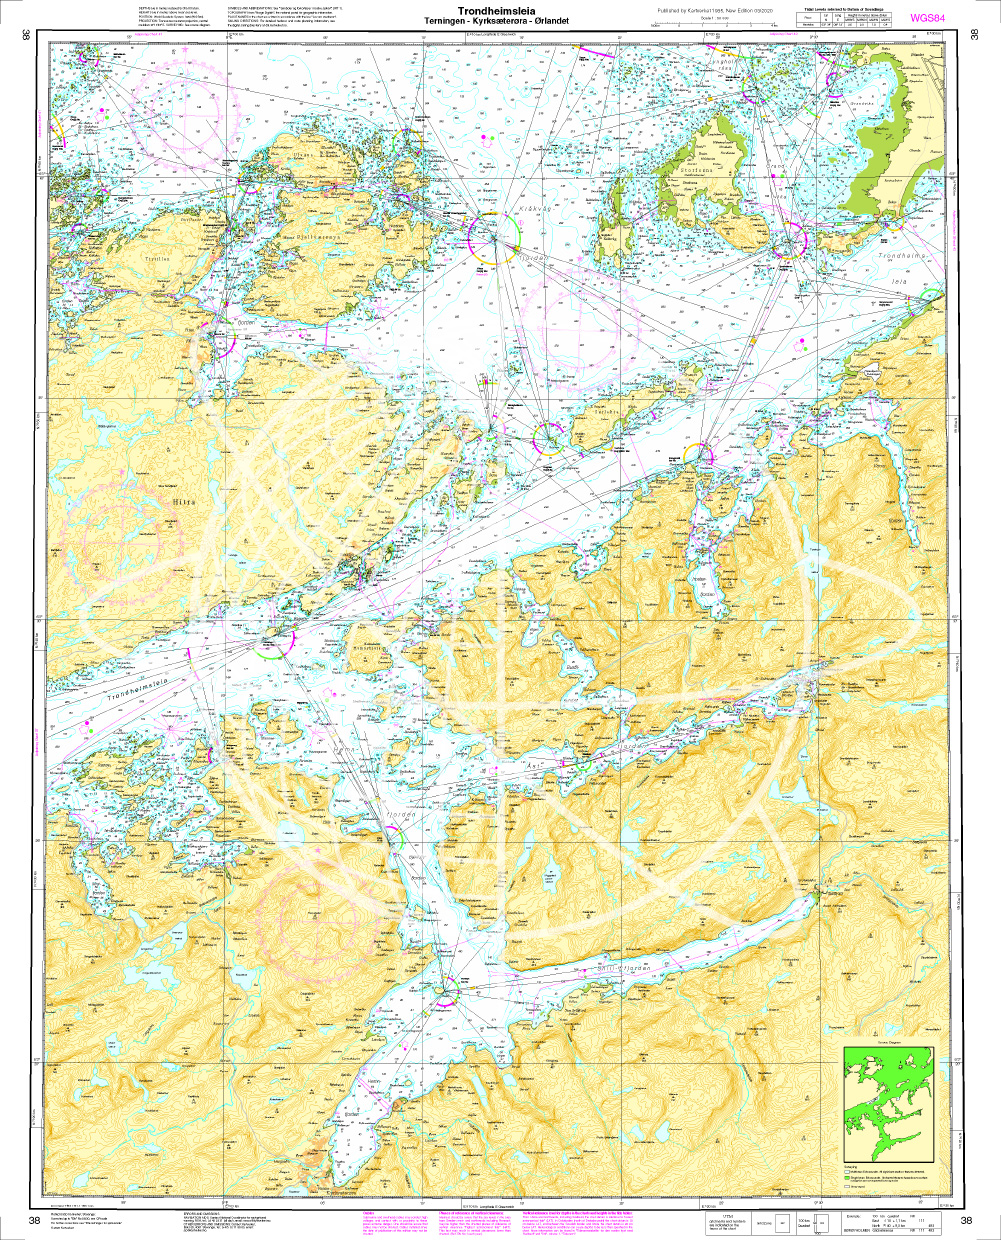 Norwegen N39 Atlantik, Trondheimsfjord mit  Agdenes - Thamshamn - Buvika